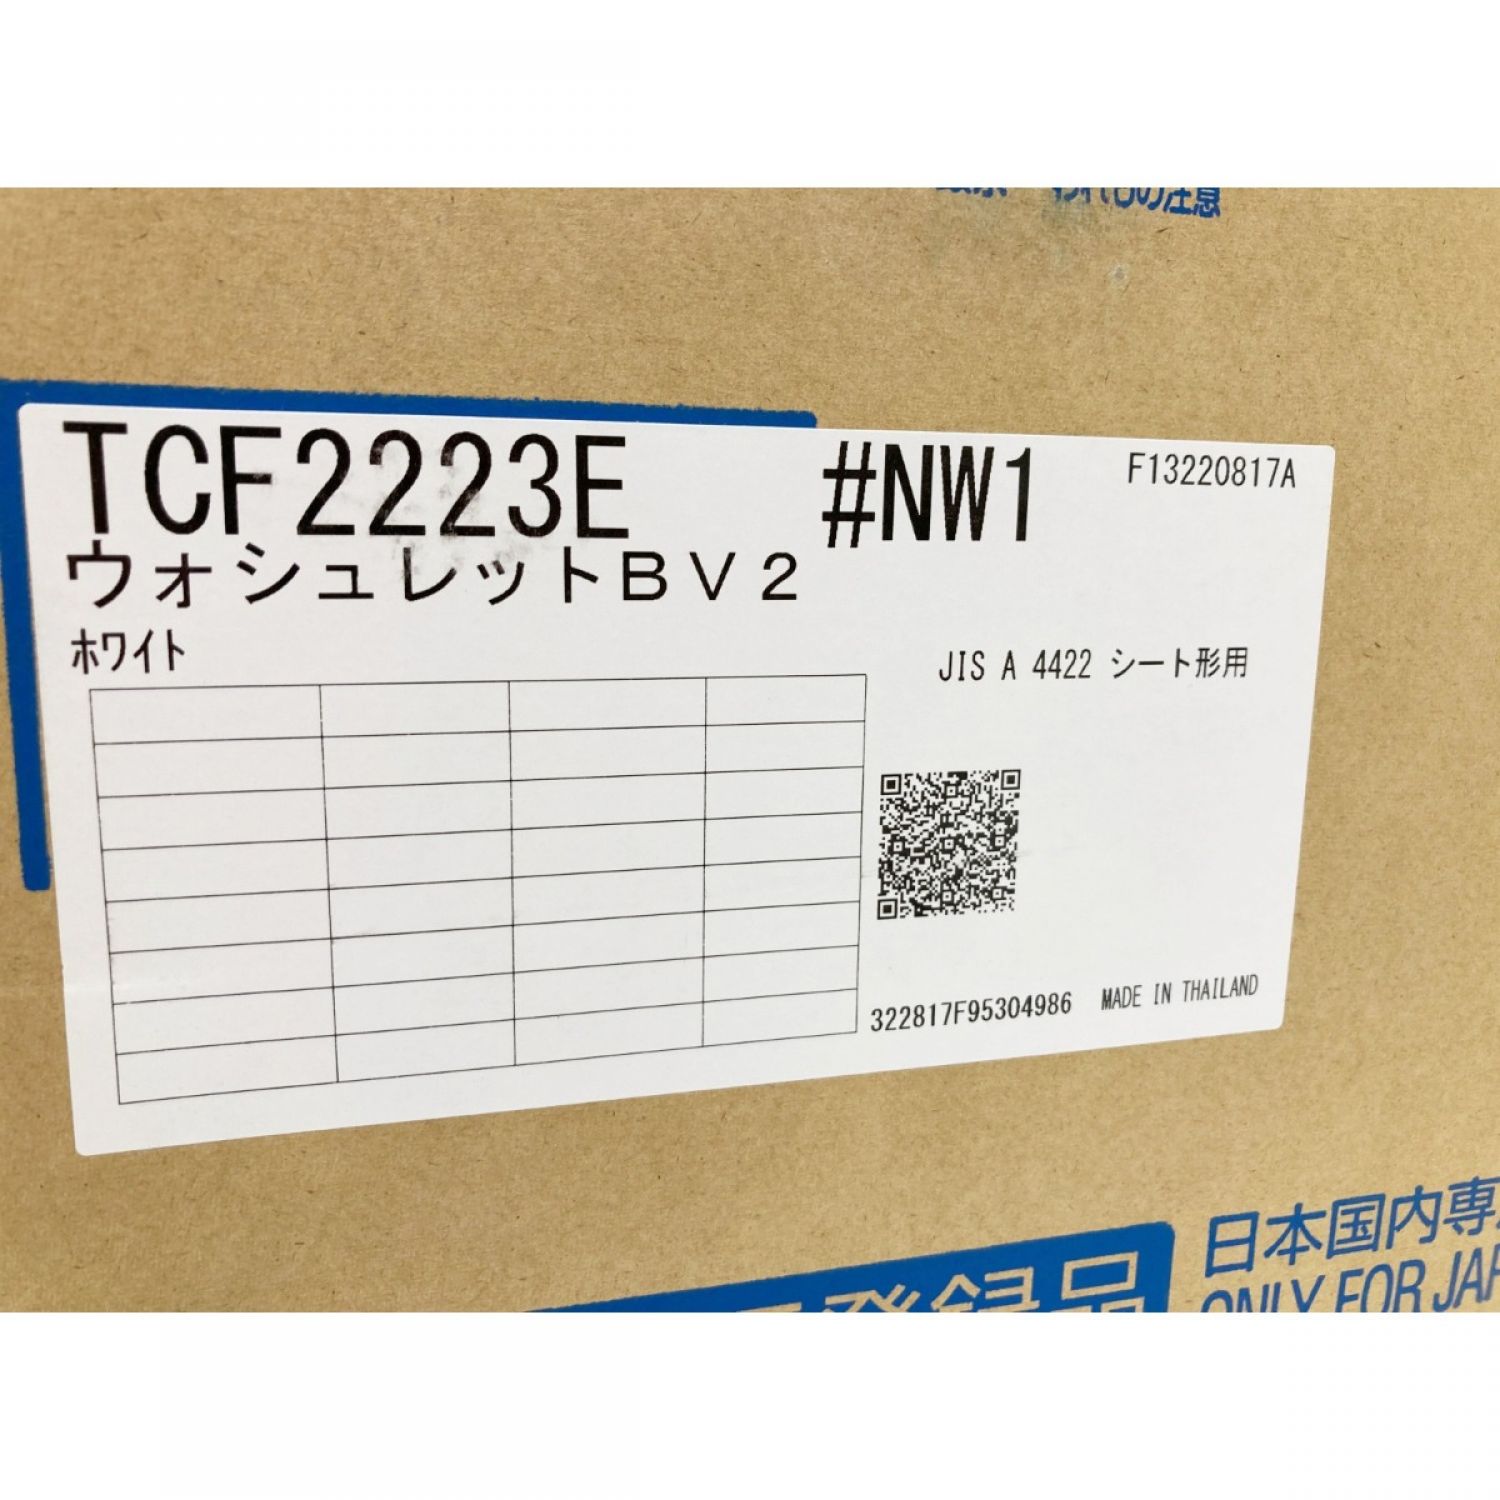 TCF2223E-NW1 ウォシュレット BV TOTO 温水洗浄便座 貯湯式 - 通販